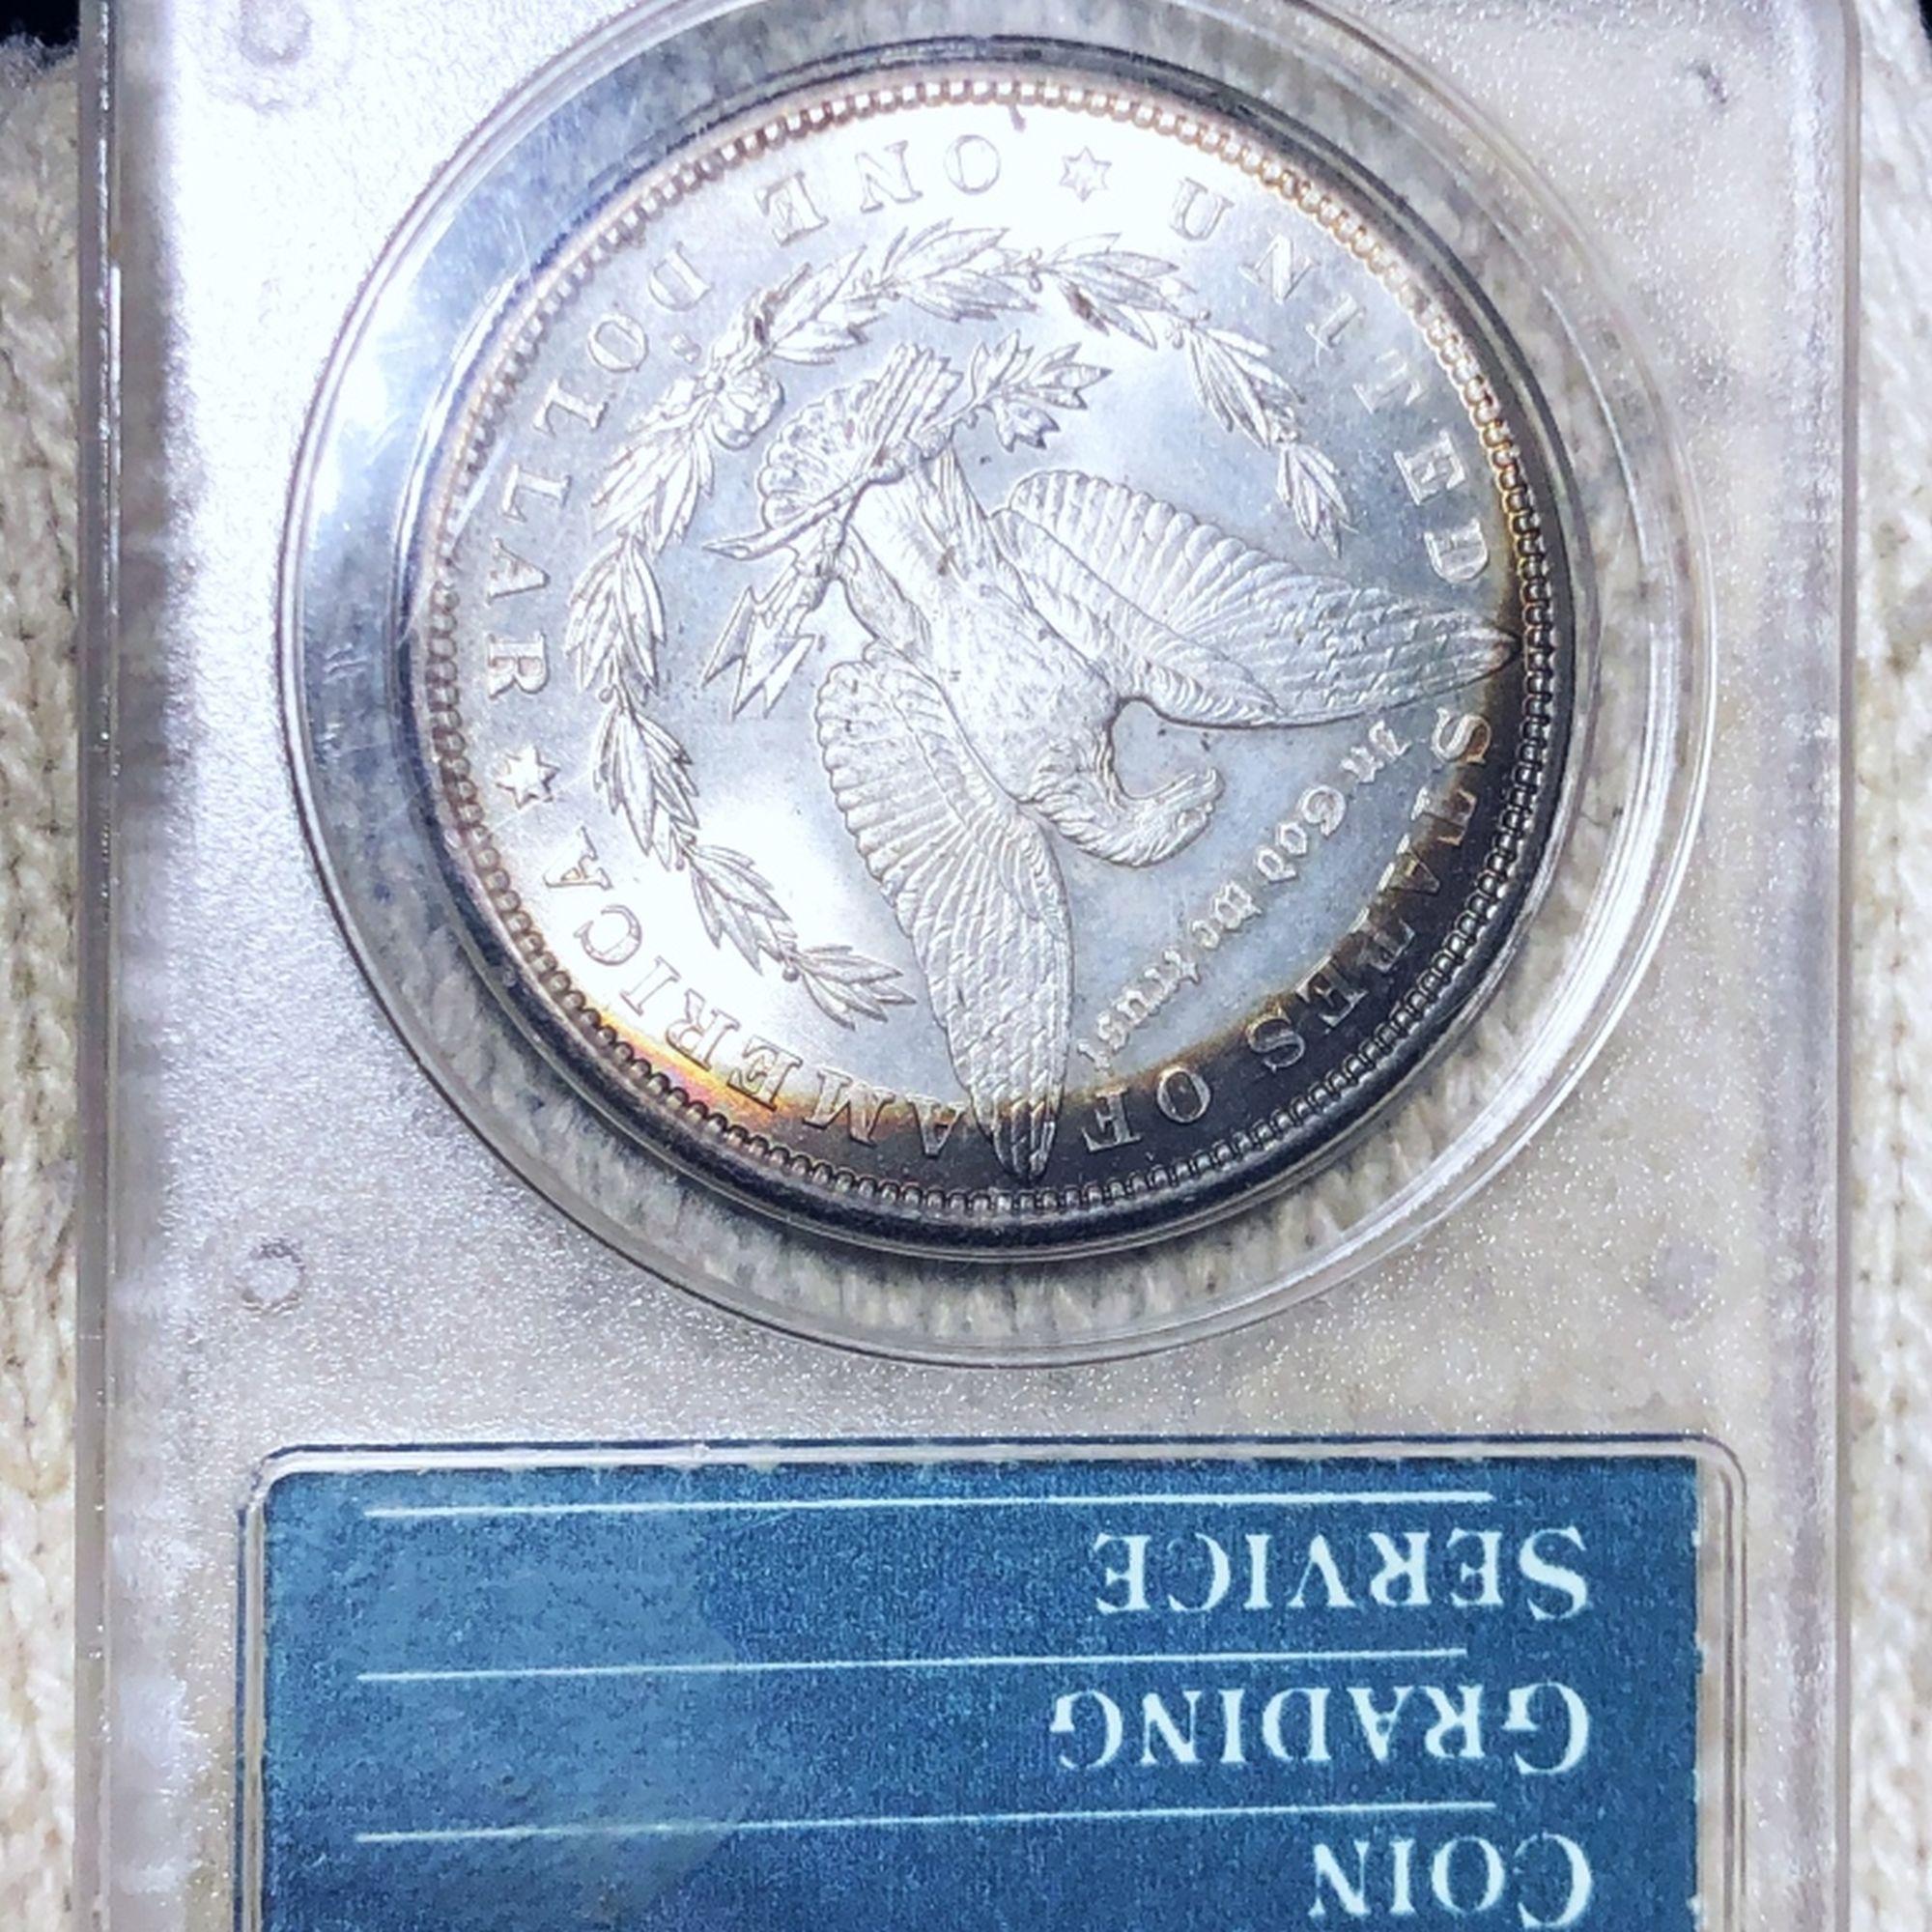 1879-S Morgan Silver Dollar PCGS - MS64